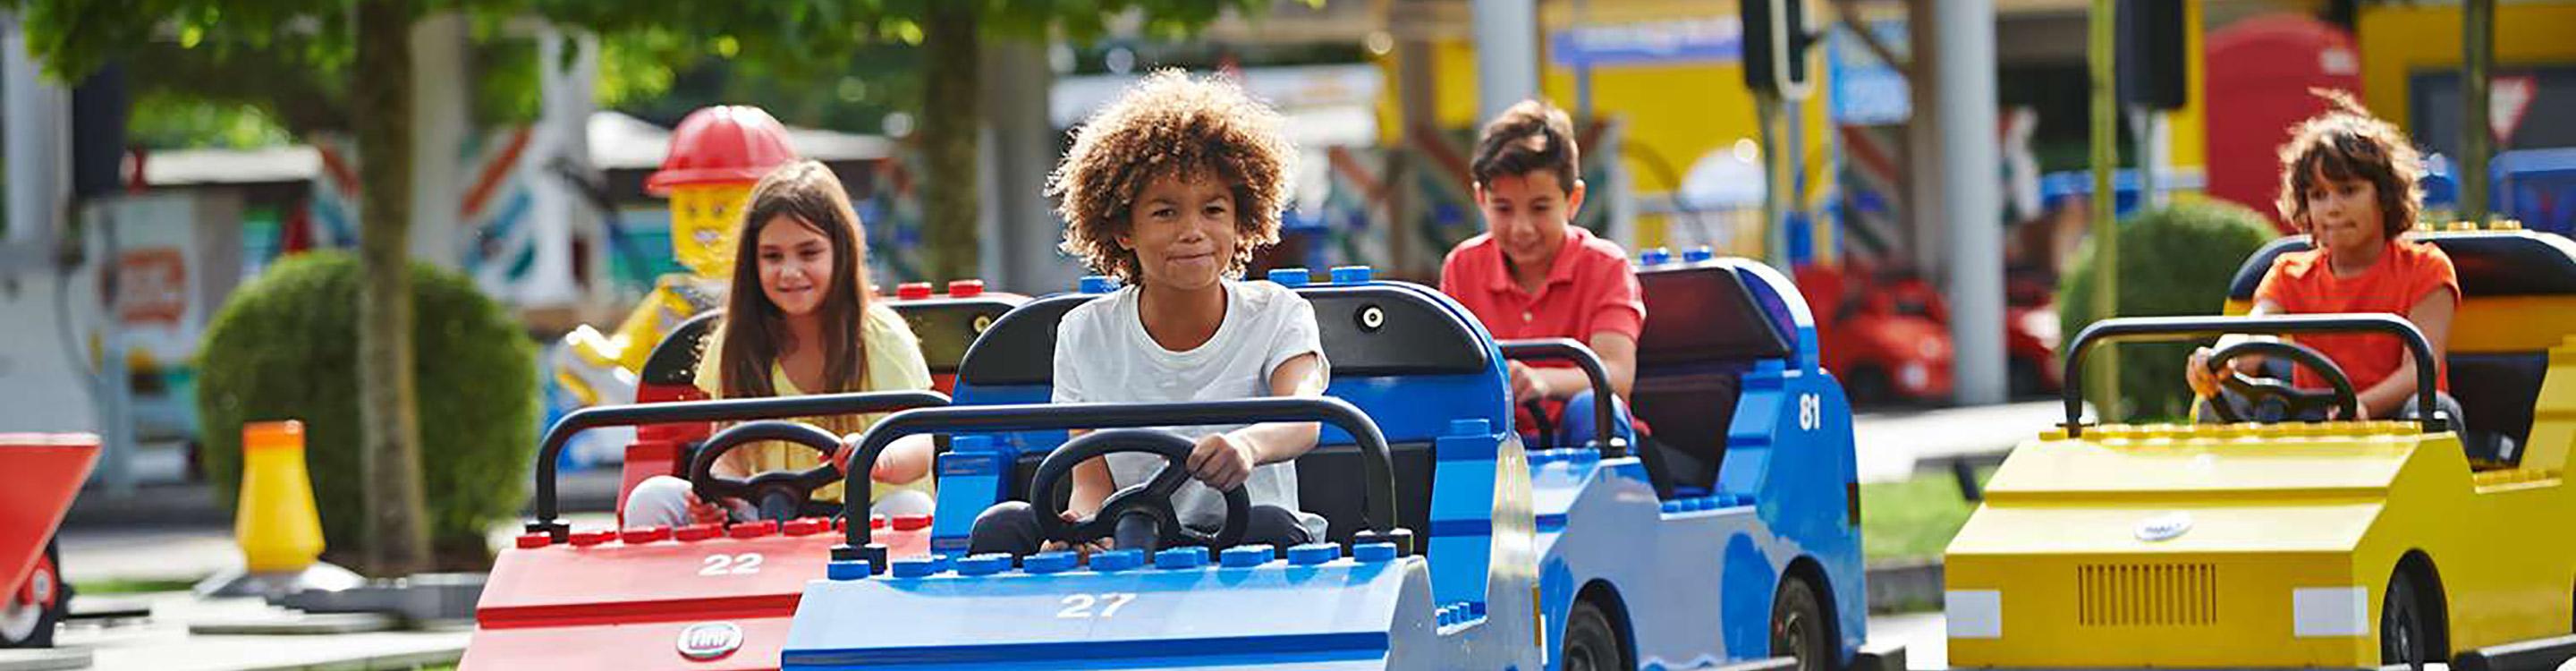 Children riding miniature cars at Legoland Driving school, Windsor